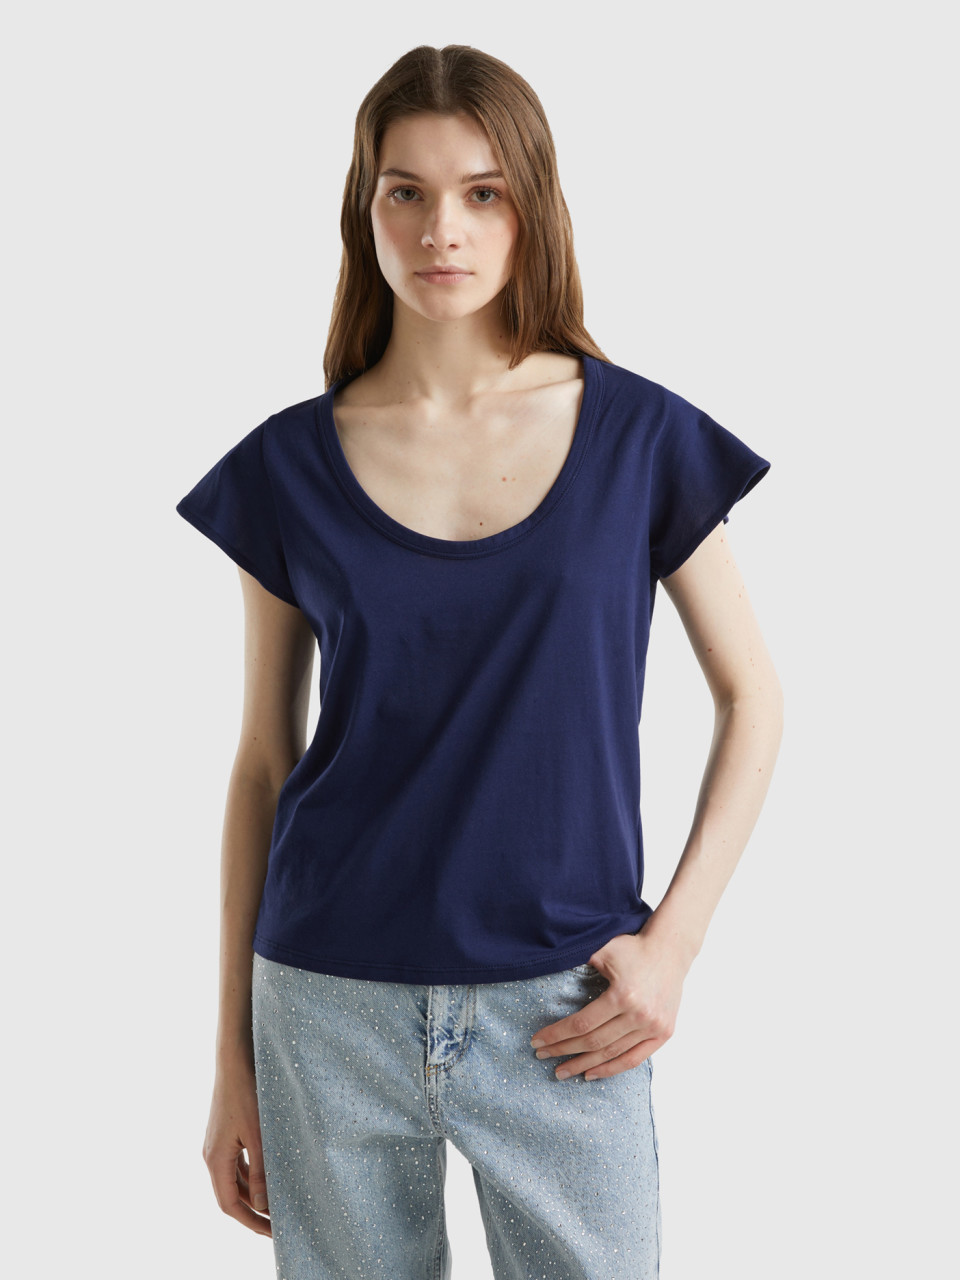 Benetton, T-shirt With Wide Neck, Dark Blue, Women